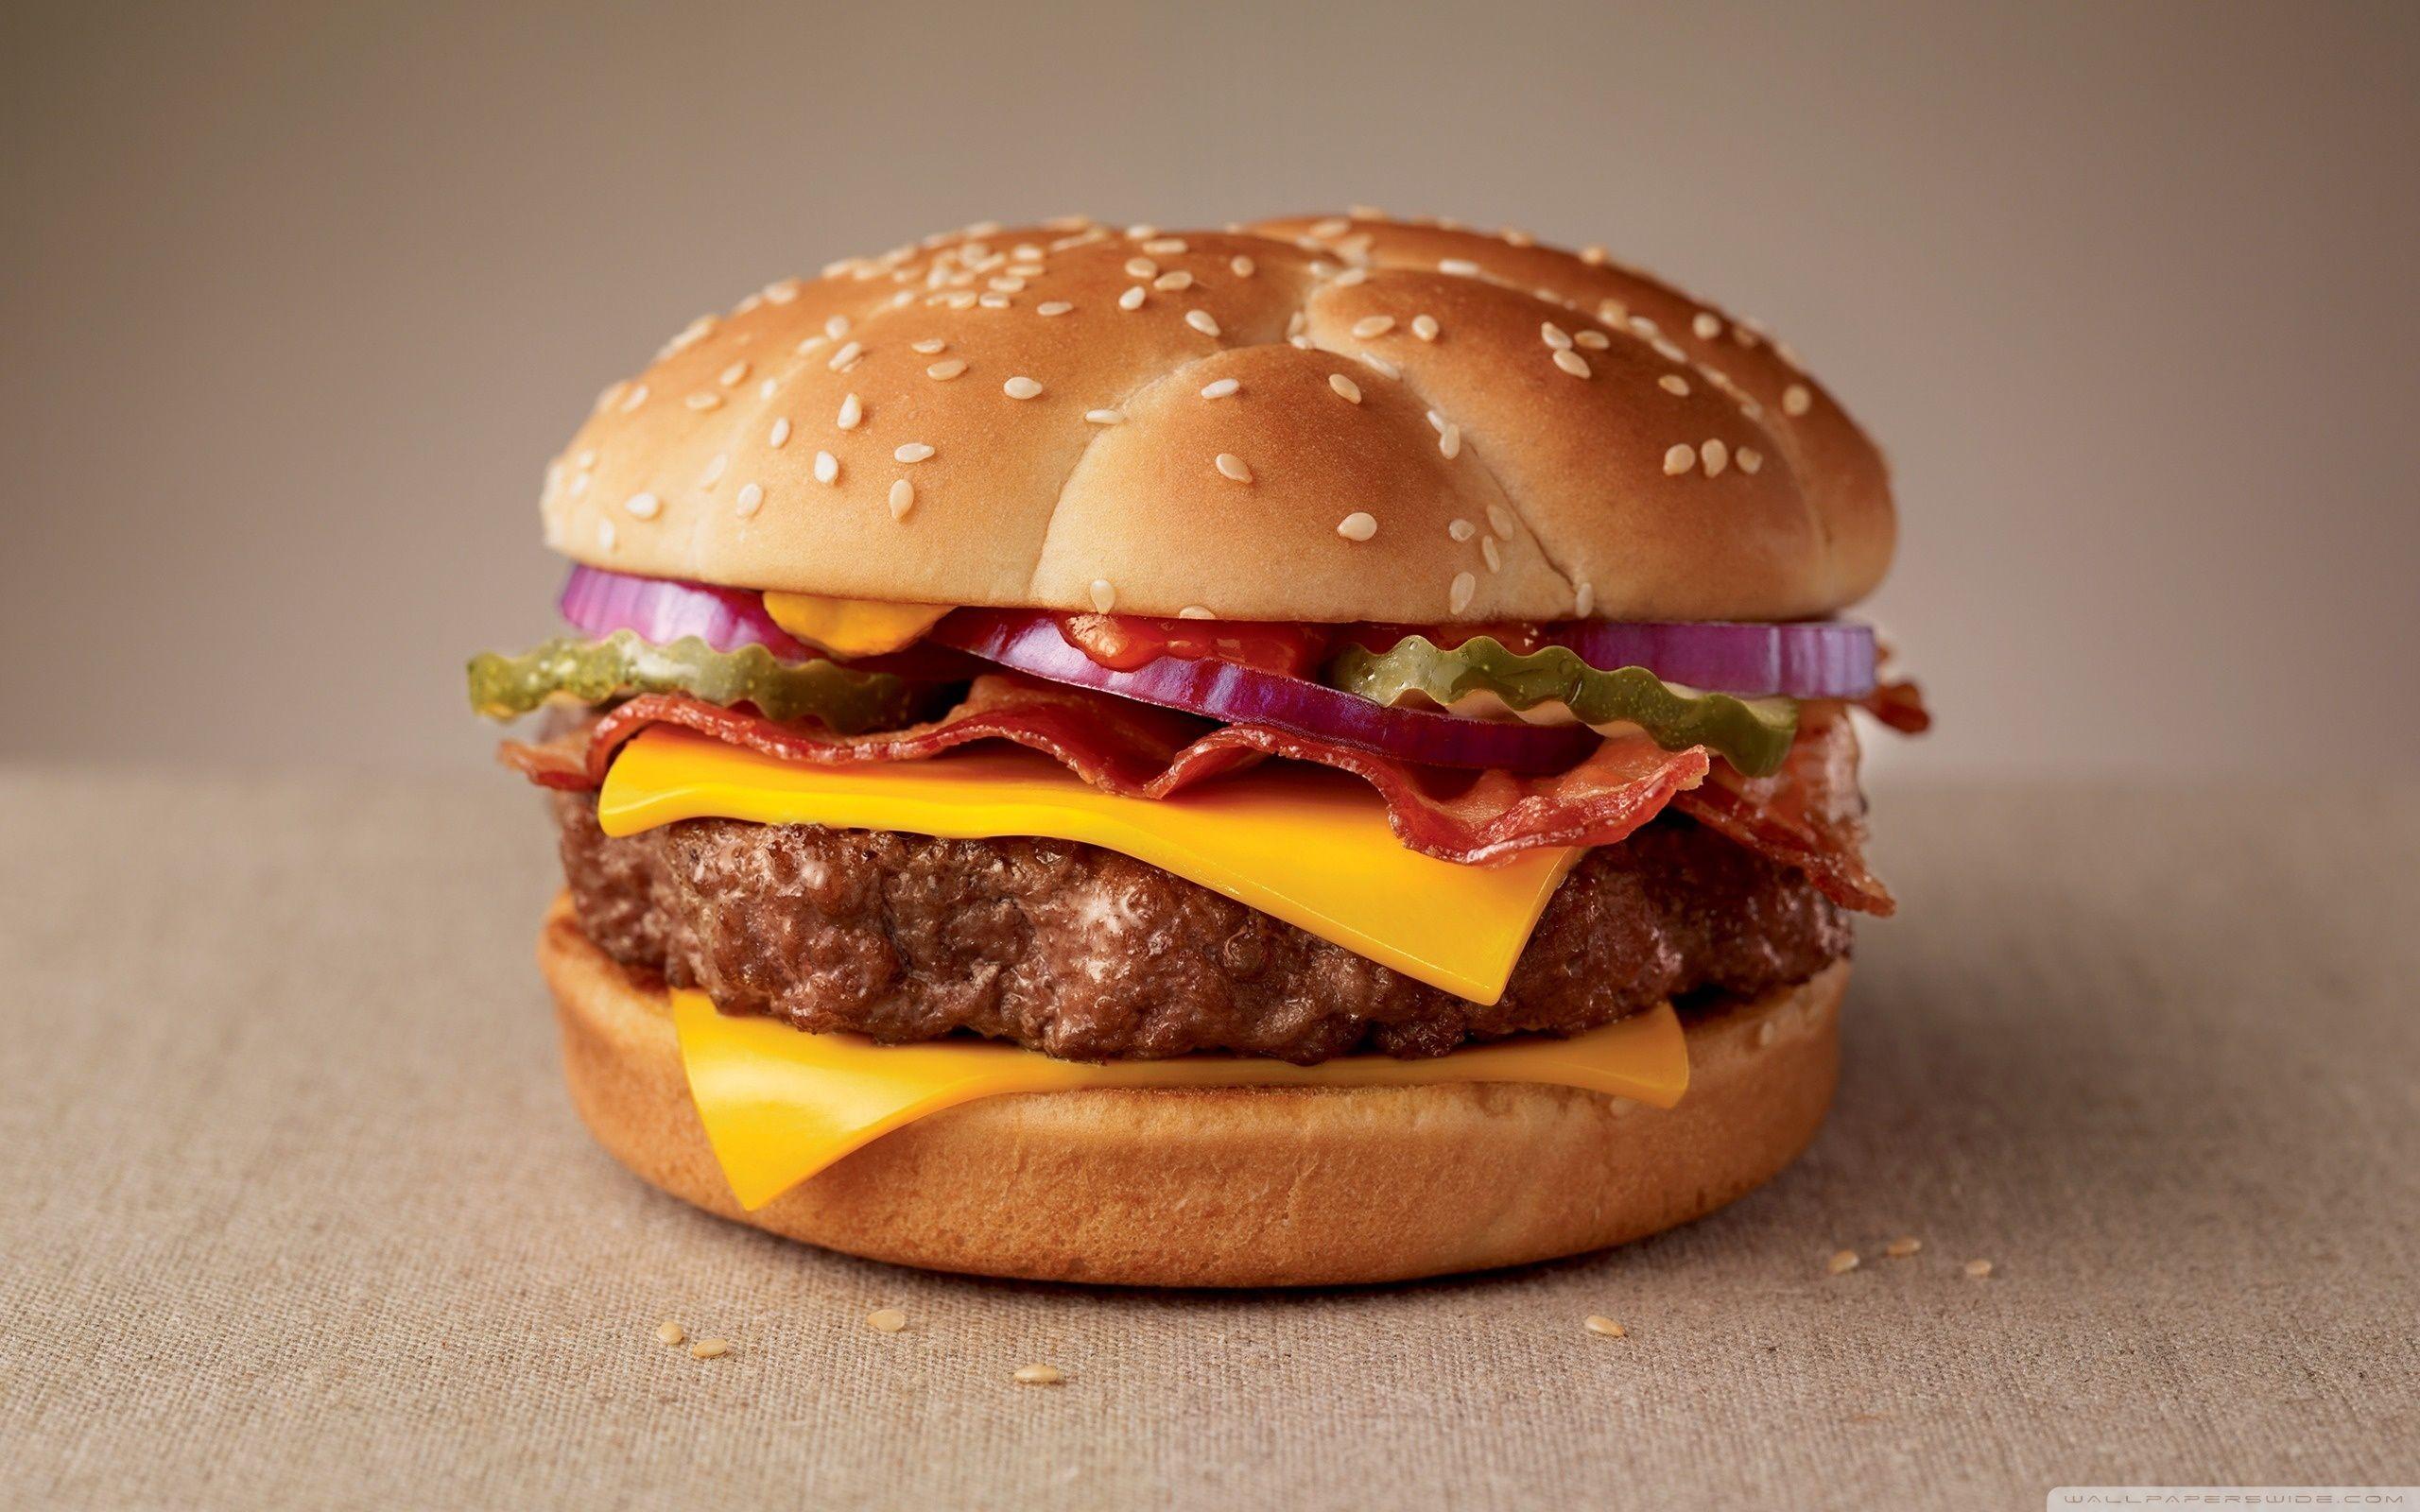 Fast Food Burger ❤ 4K HD Desktop Wallpaper for 4K Ultra HD TV